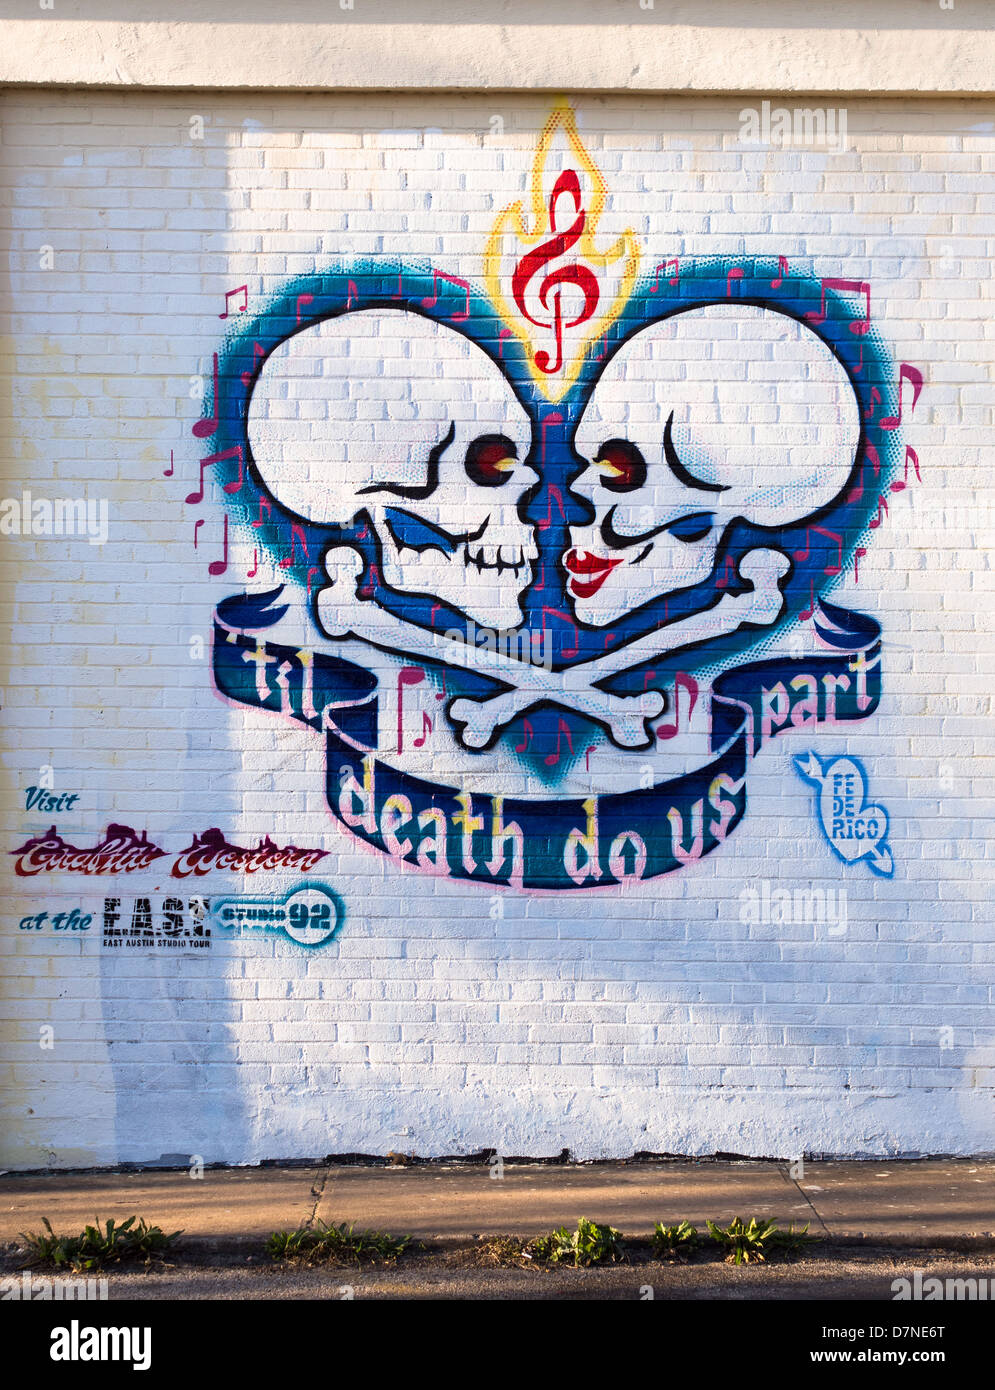 Til Death Do Us Part Street Graffiti by Austin, Texas artist Federico Archuleta Stock Photo